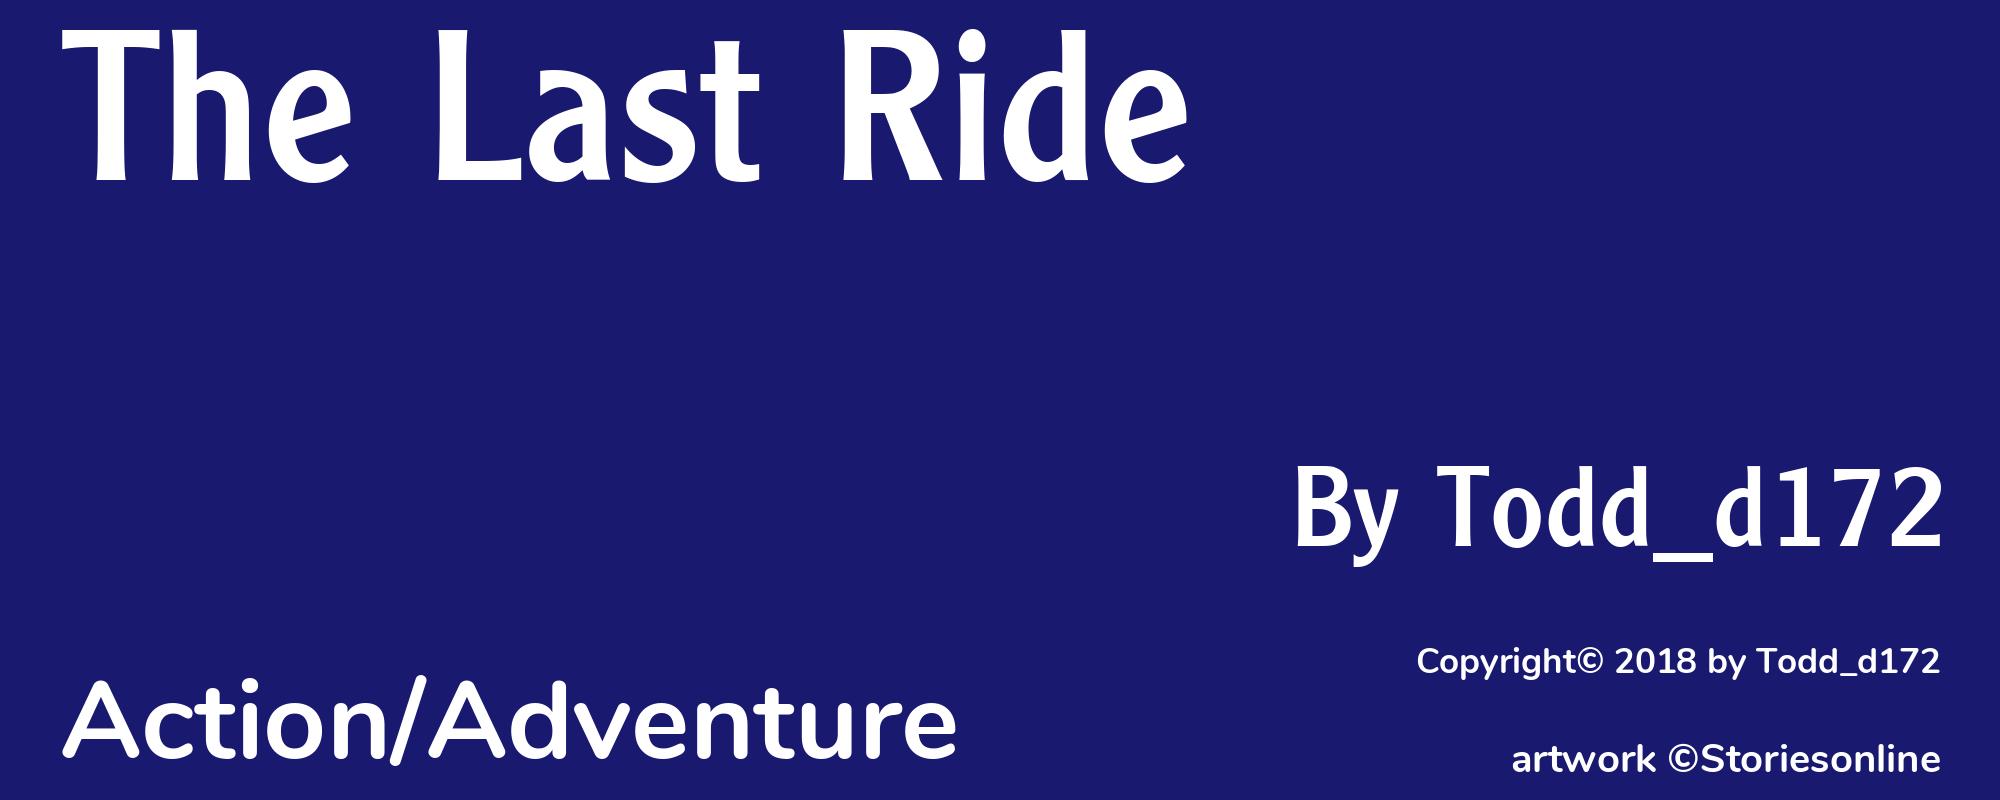 The Last Ride - Cover